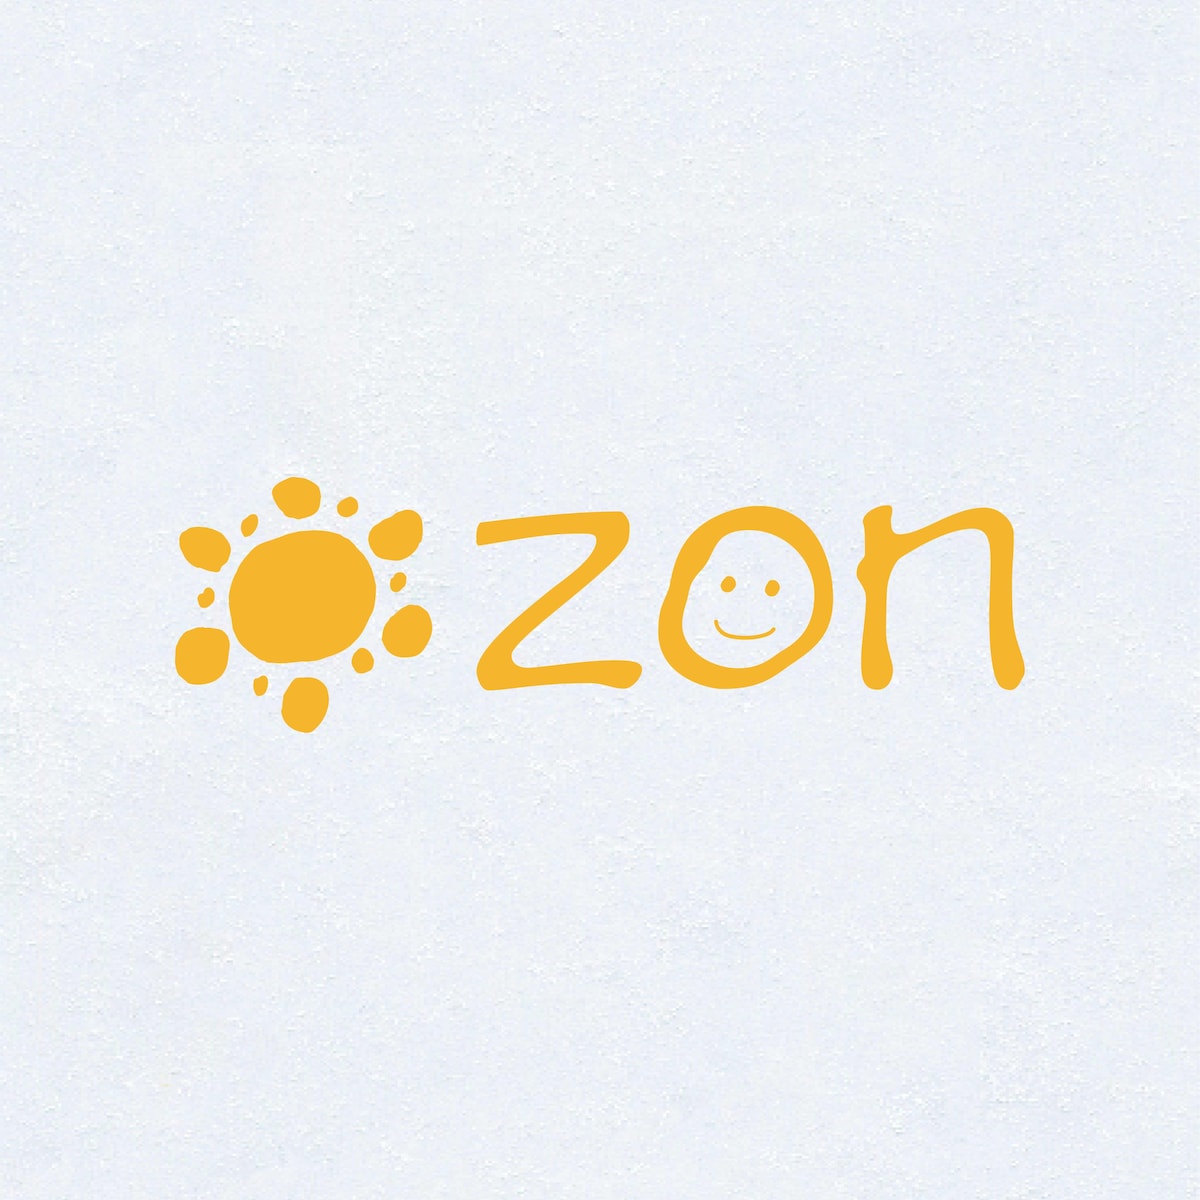 ZON